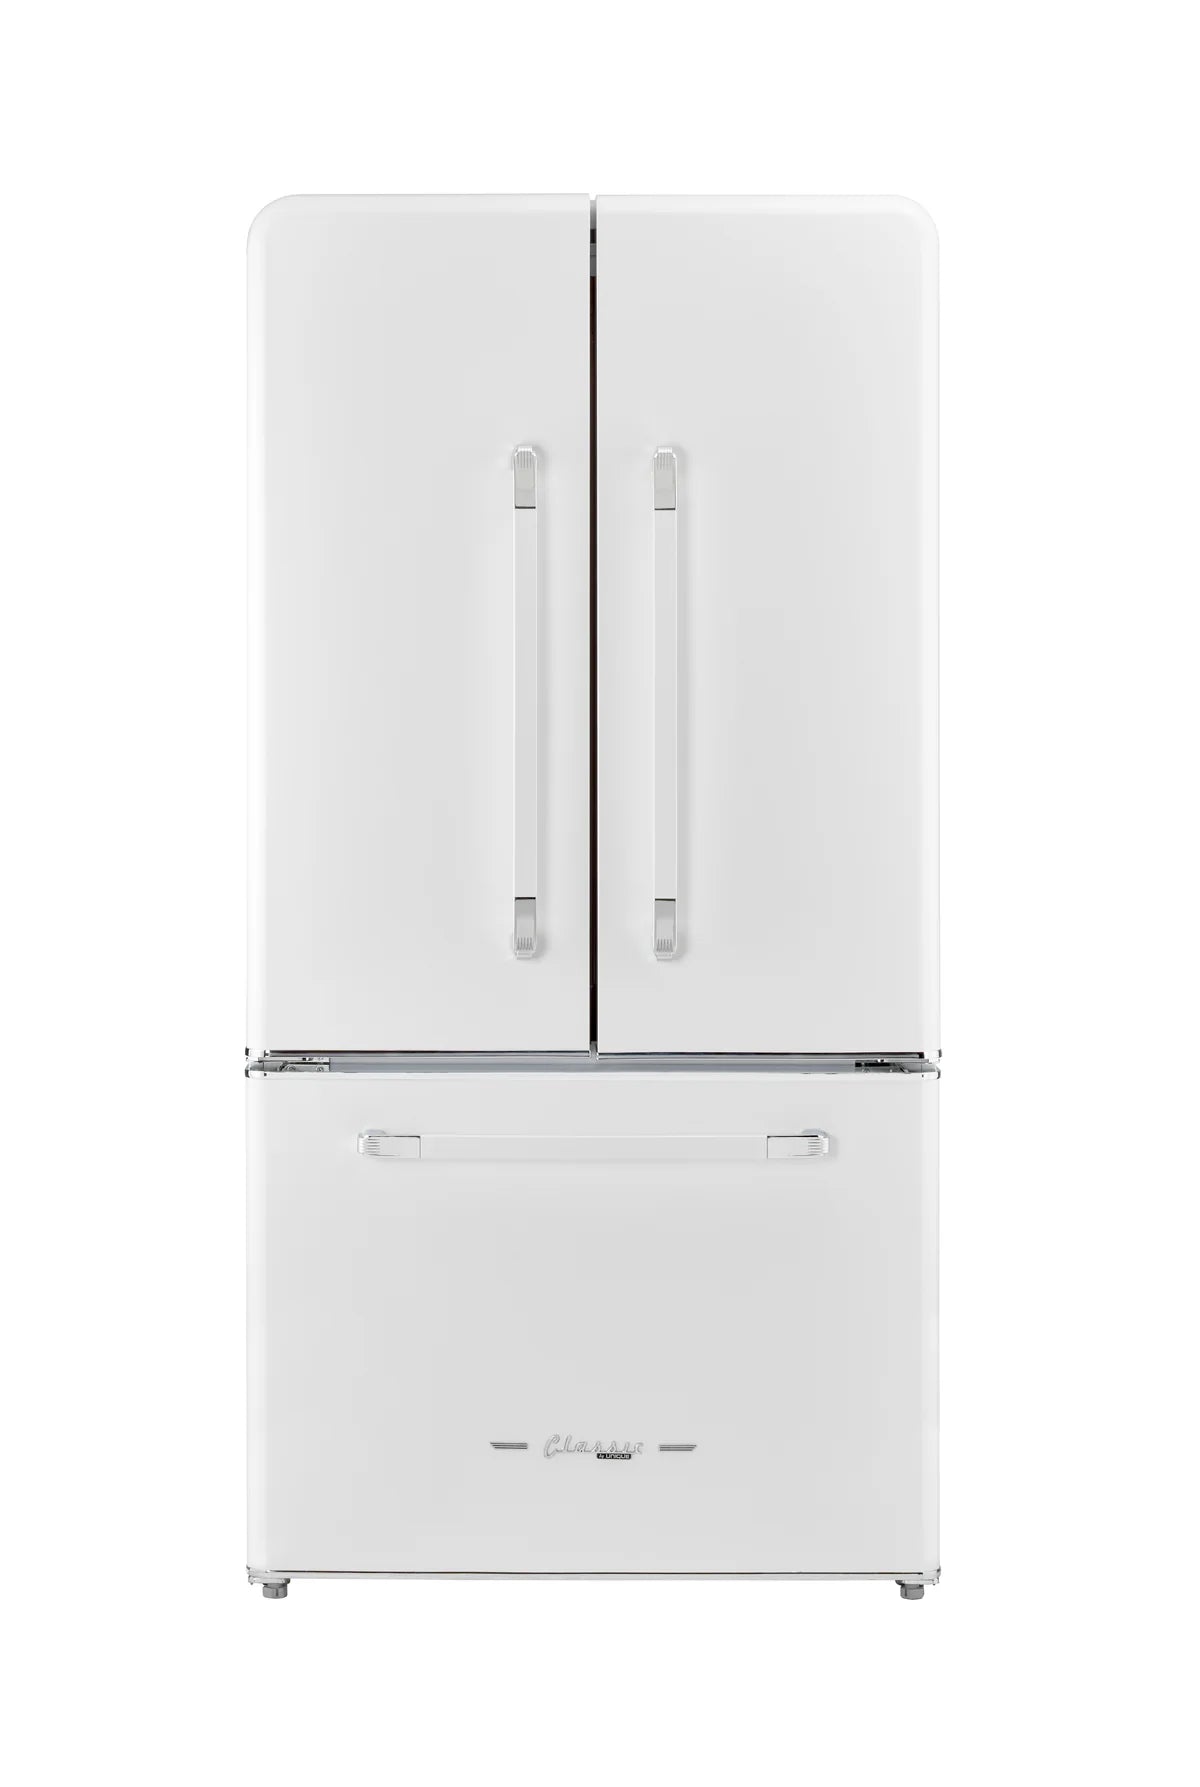 Unique Refrigerator-Freezer Unique 595Litre Marshmallow White French Door Refrigerator UGP-595L W AC